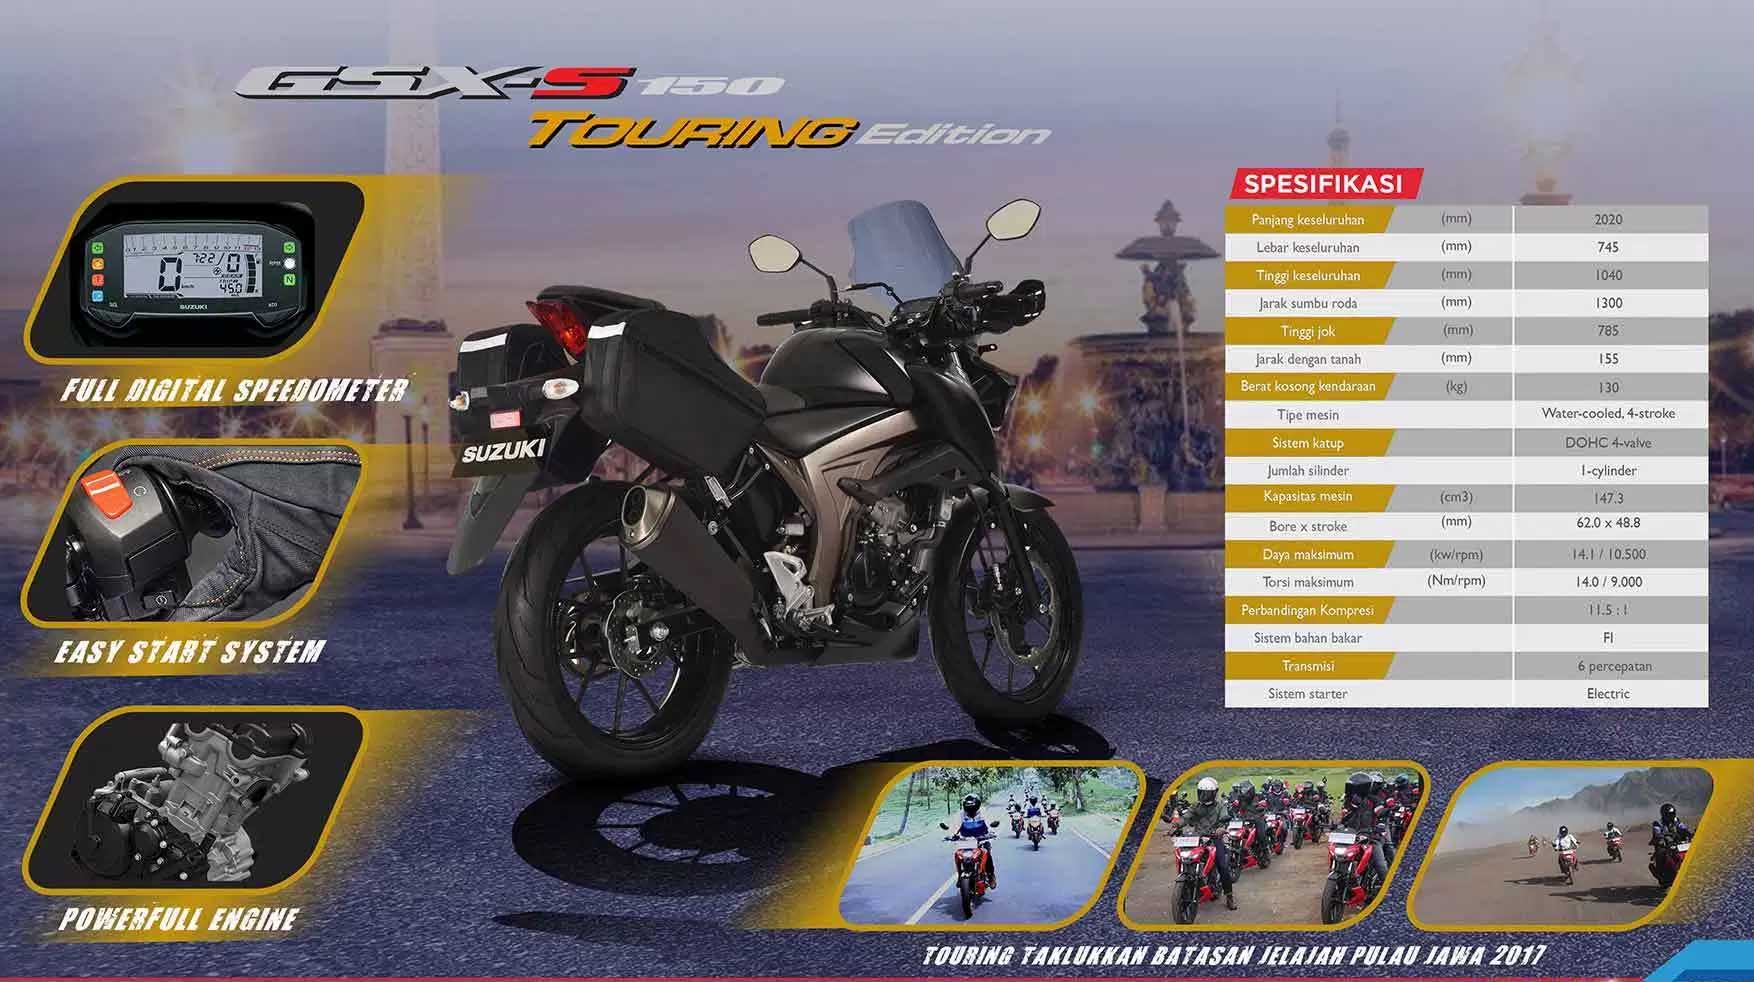 Berita, brosur suzuki gsx-s touring edition belakang: Yamaha Merilis Livery MotoGP Terbaru Pada Lima Produknya